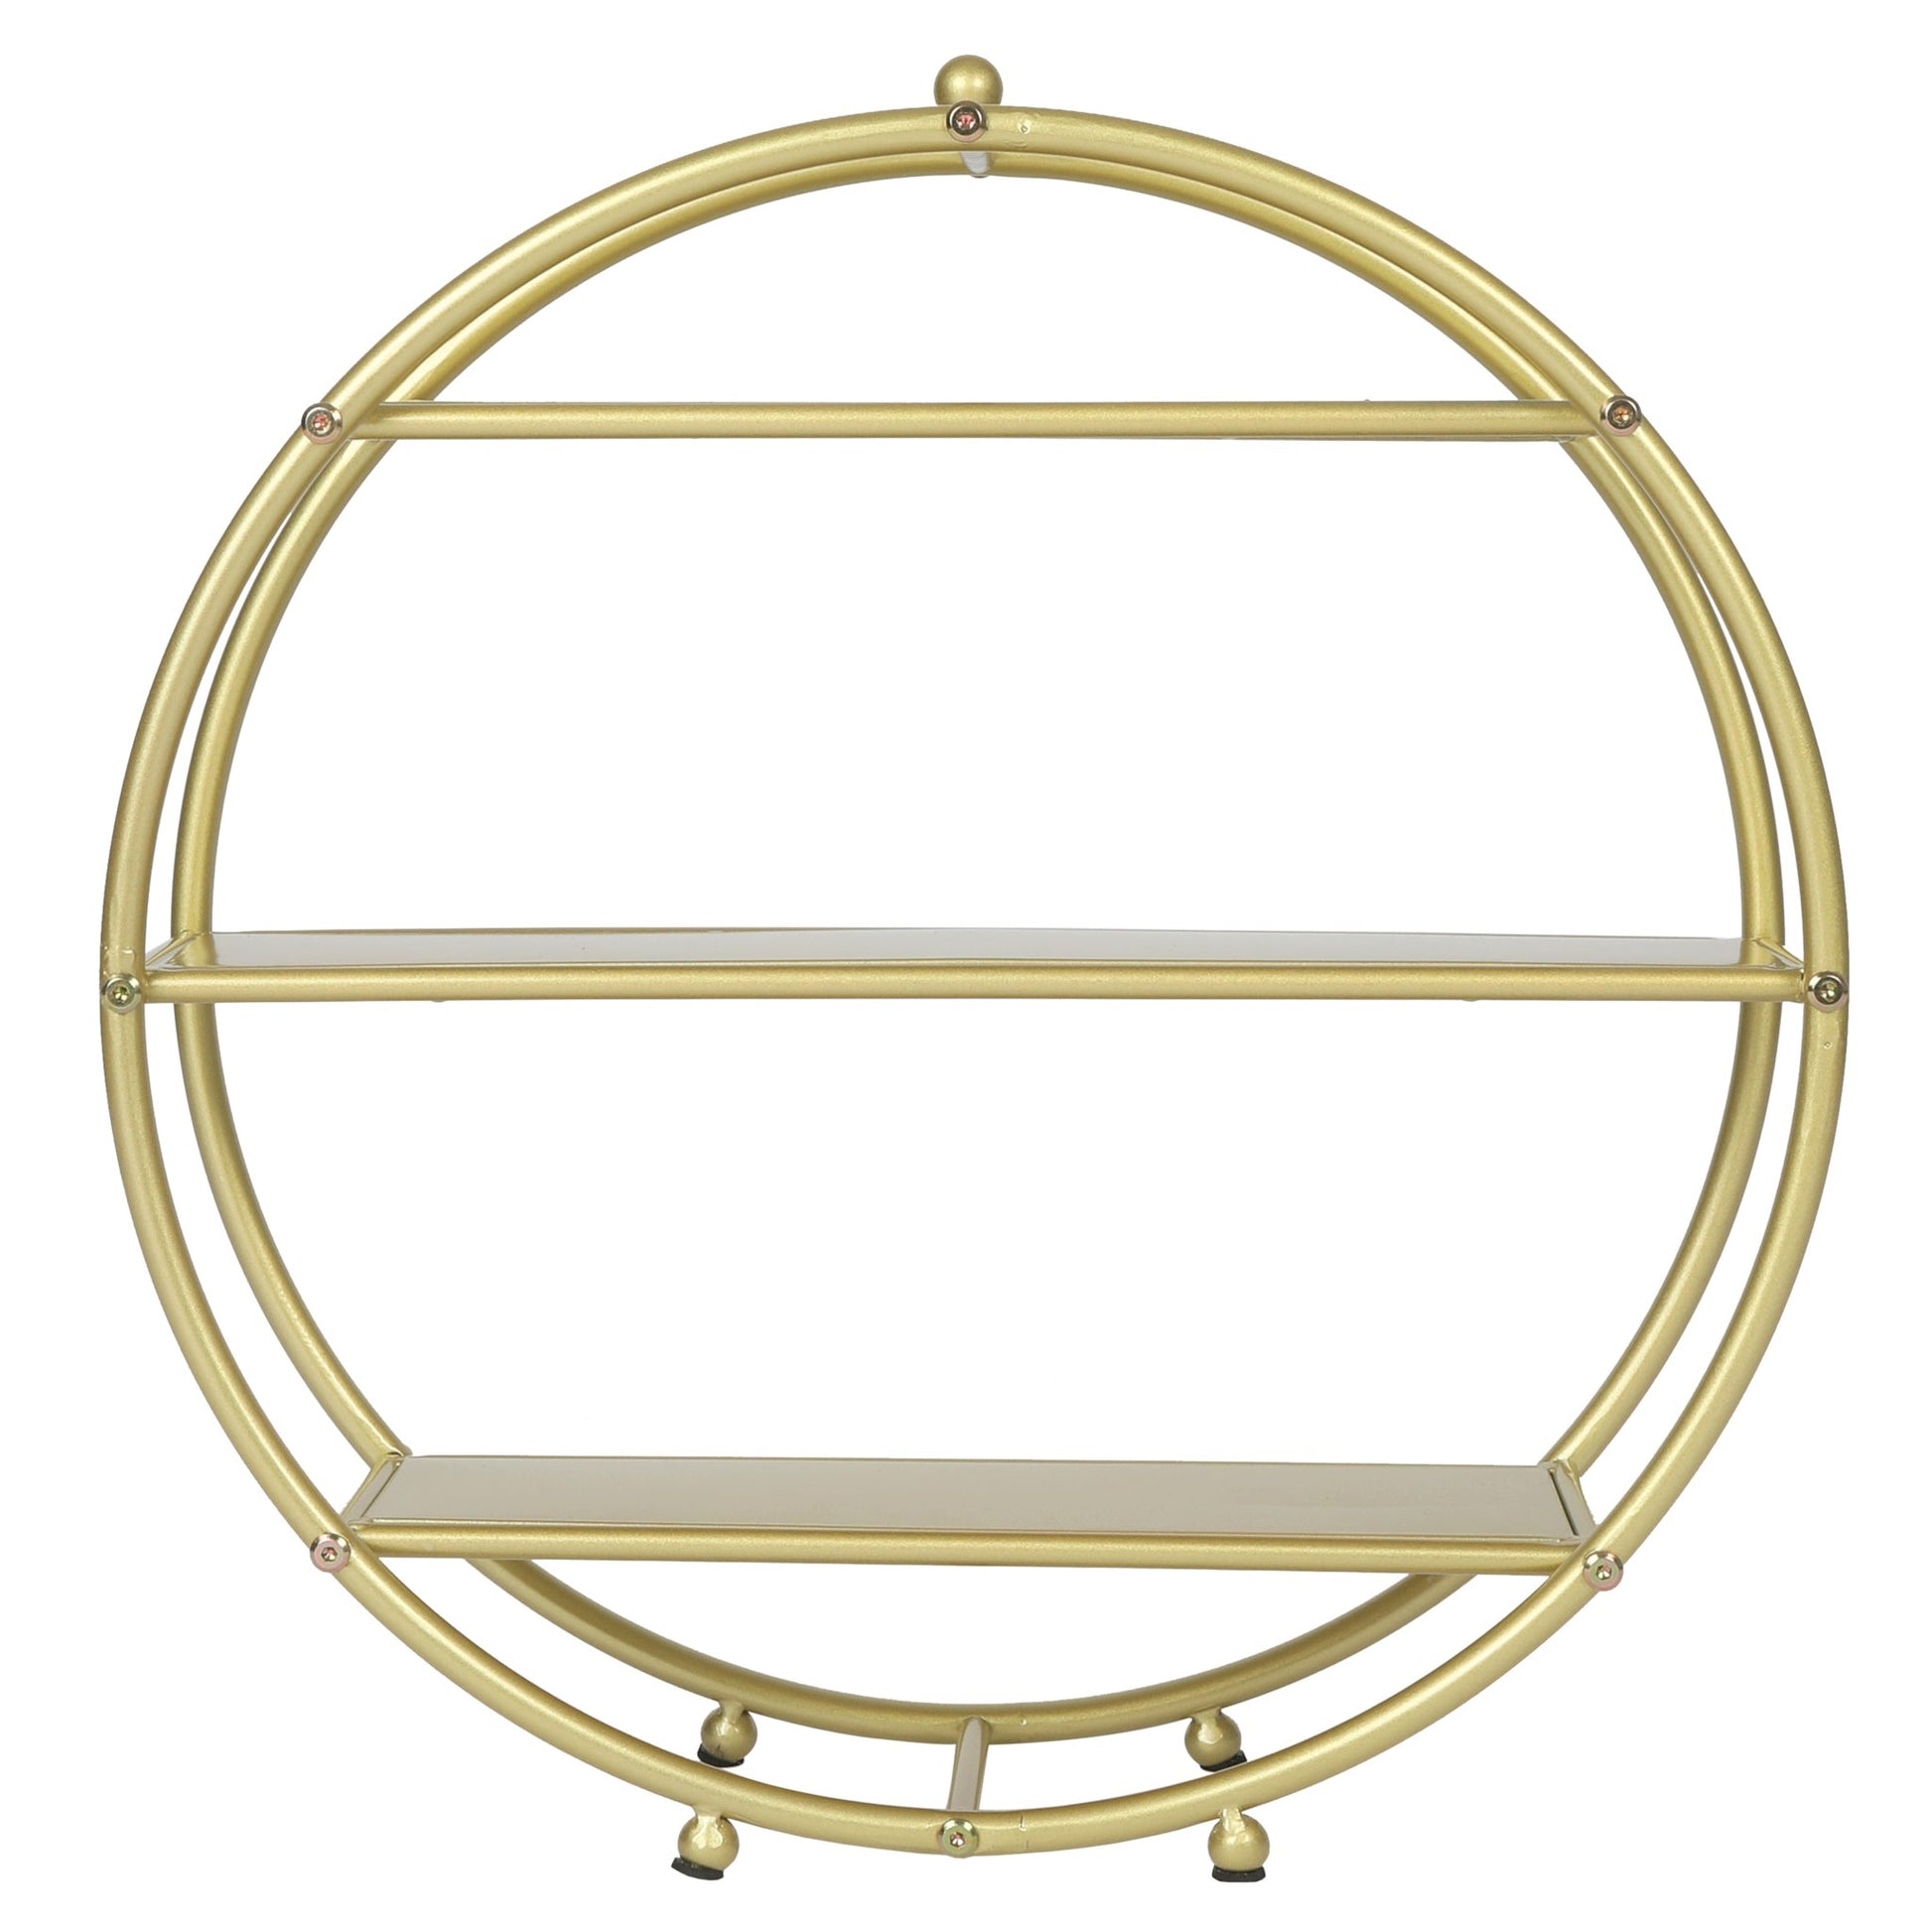 3 Tier Wheel Ring Dessert Stand - Gold